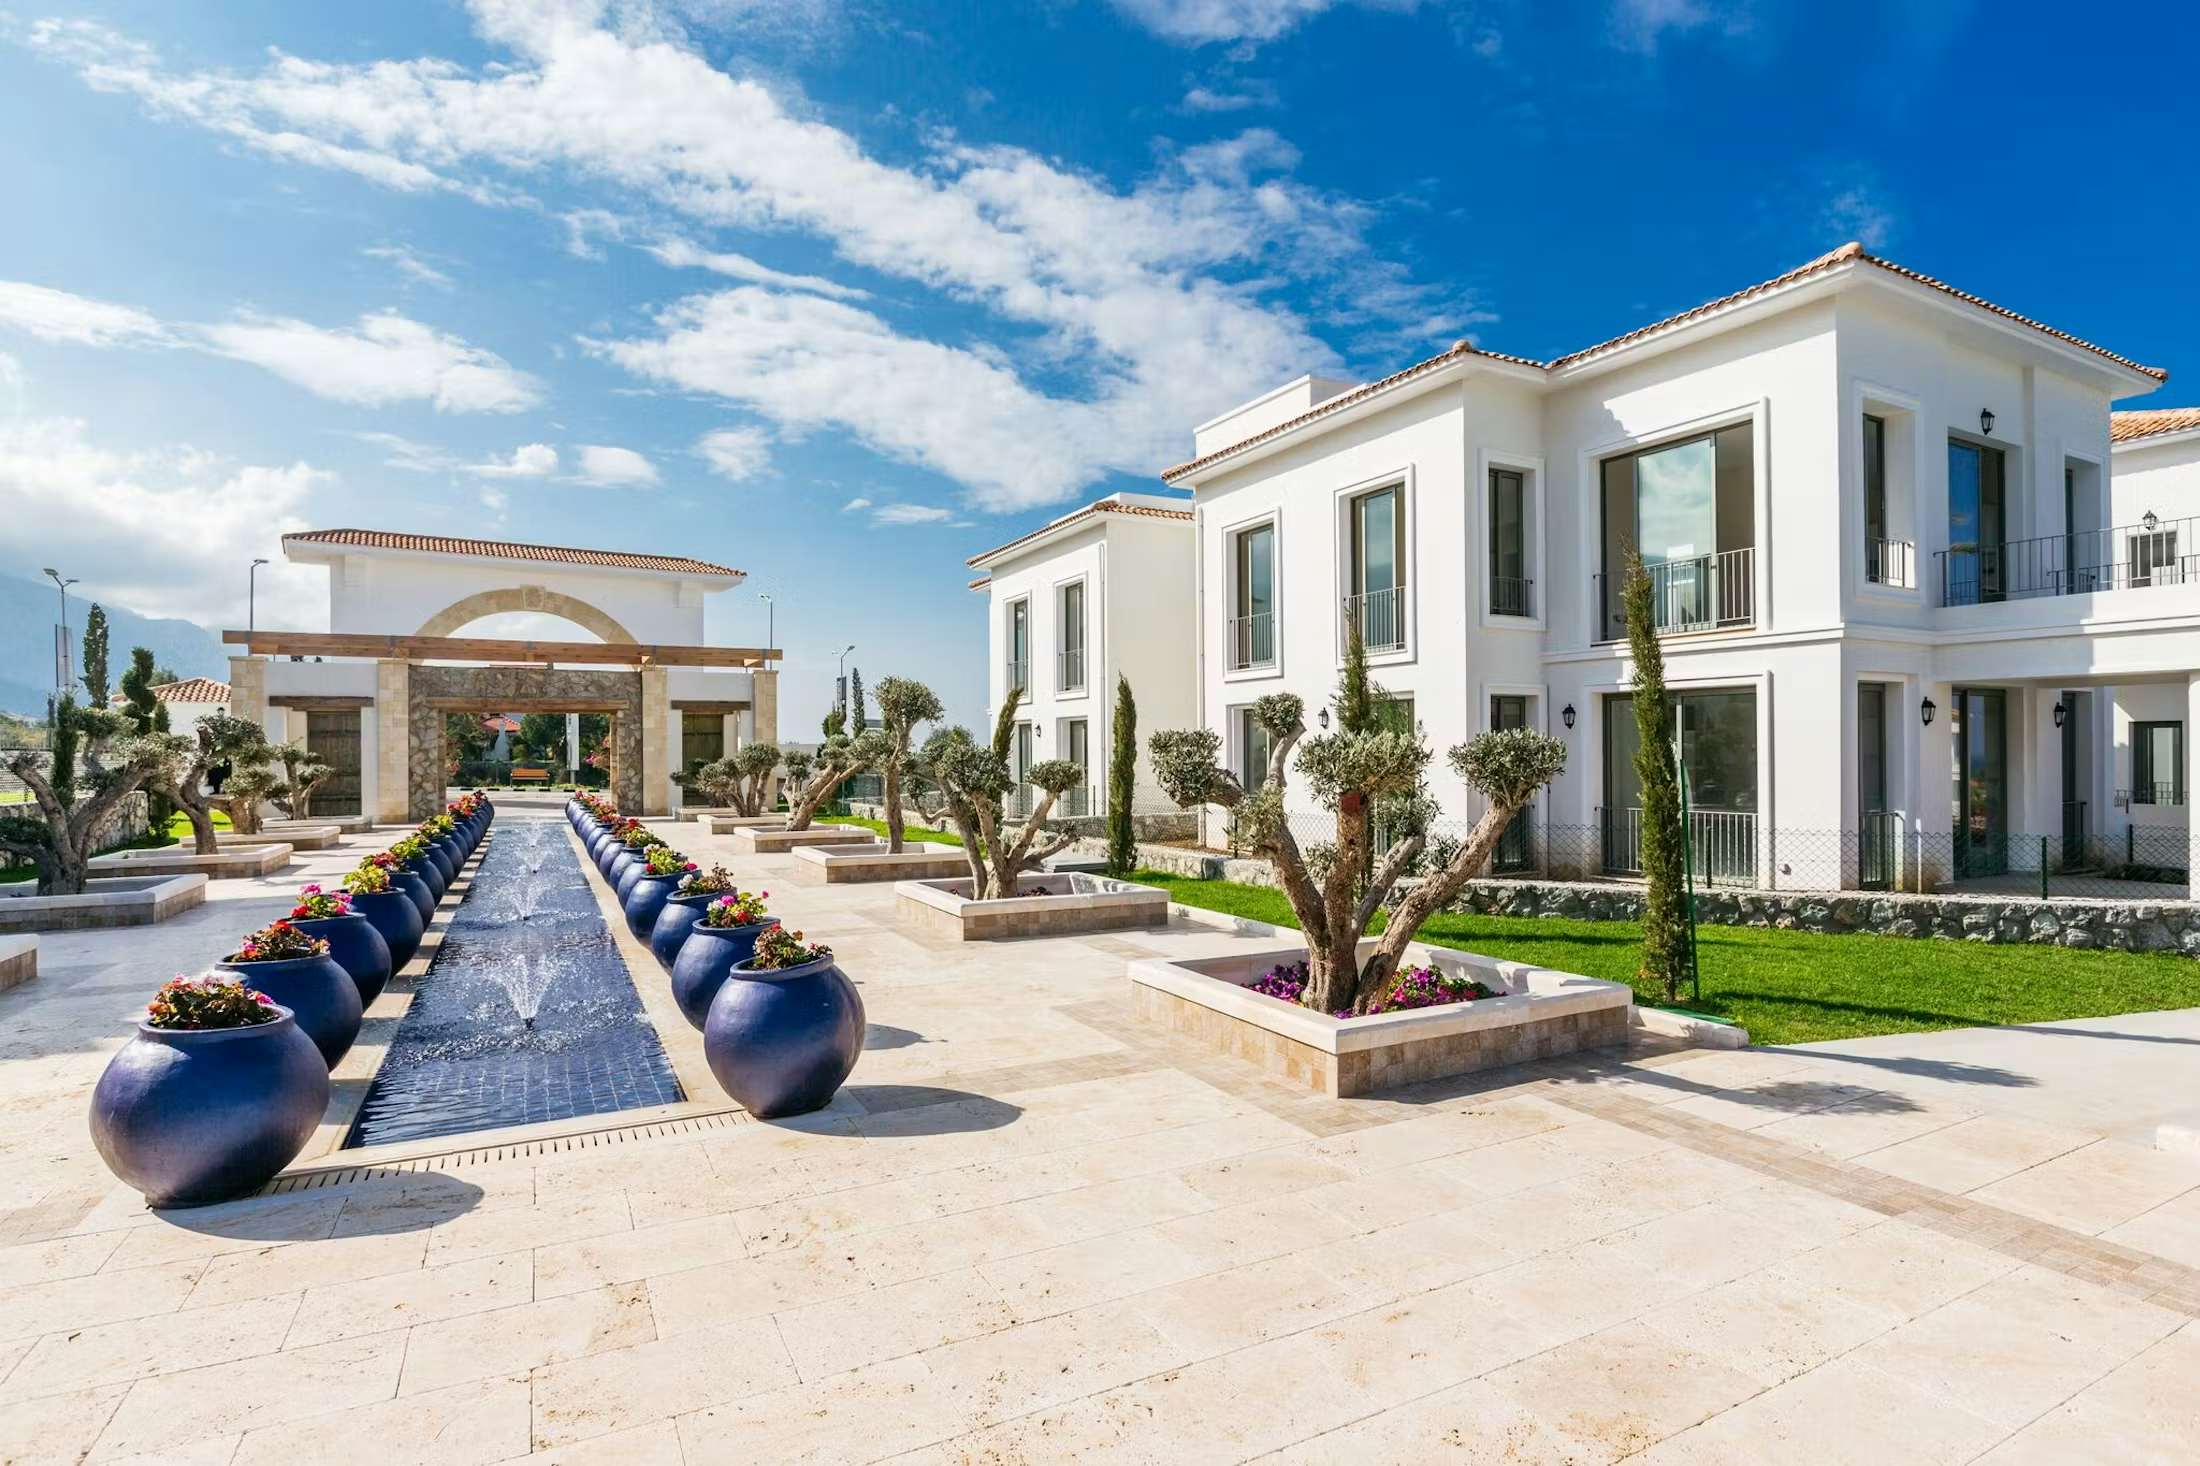 Investment Spotlight: Immobilienoptionen mit hohem ROI in Nordzypern